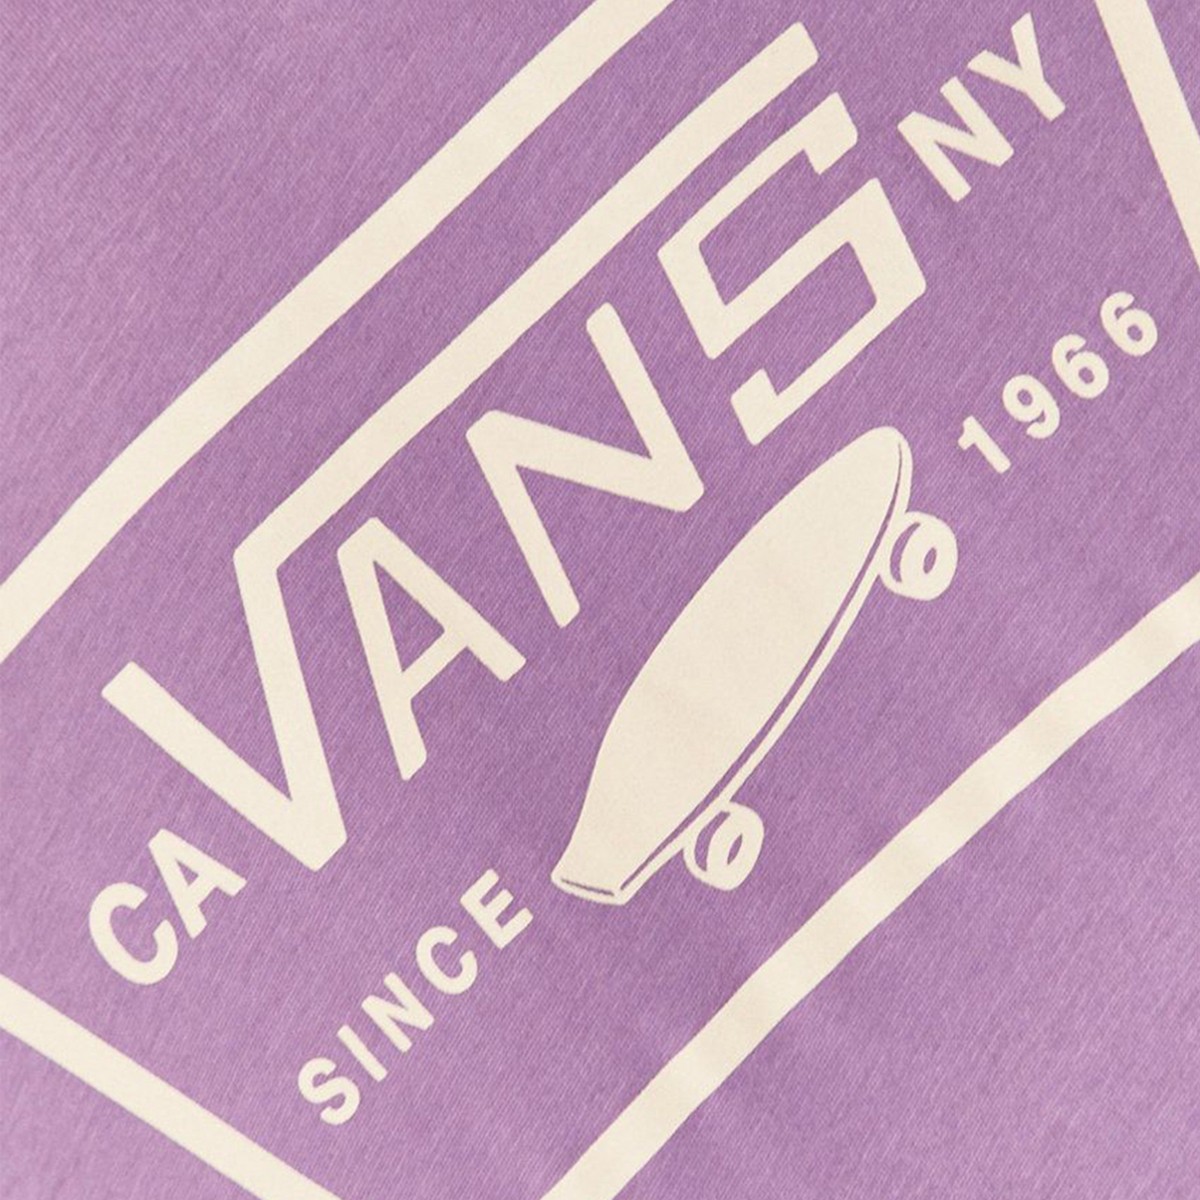 Vans Full Patch E. Lavender T-Shirt VN000QN8Z711